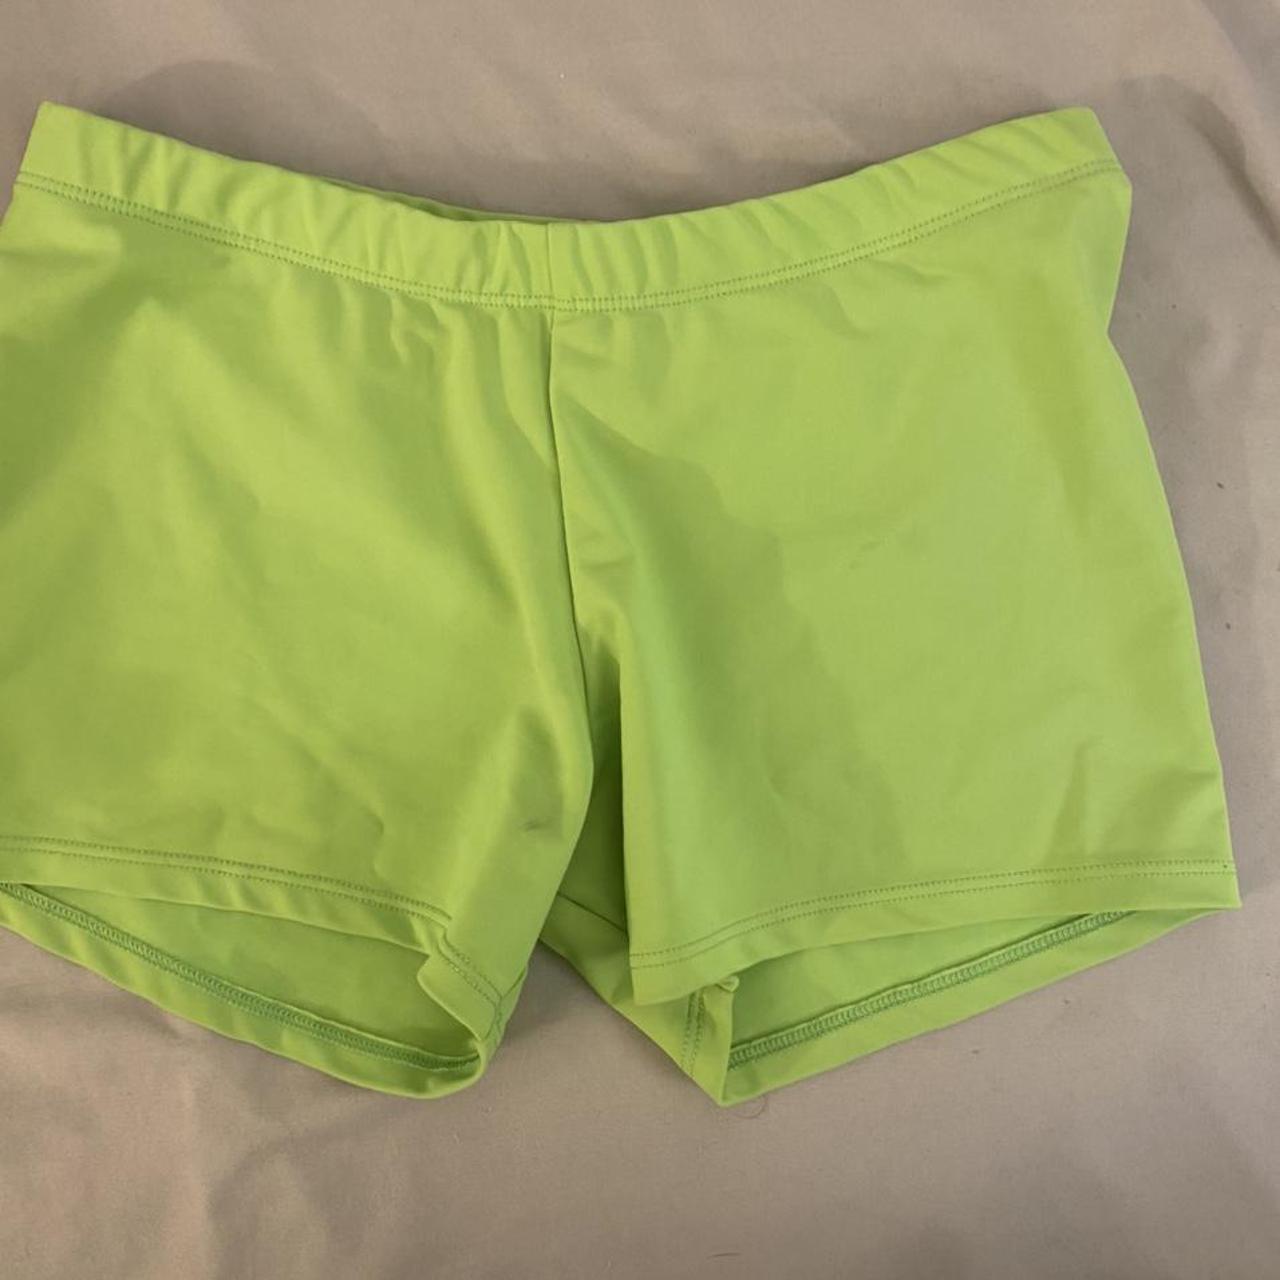 Lime green shorts - Depop